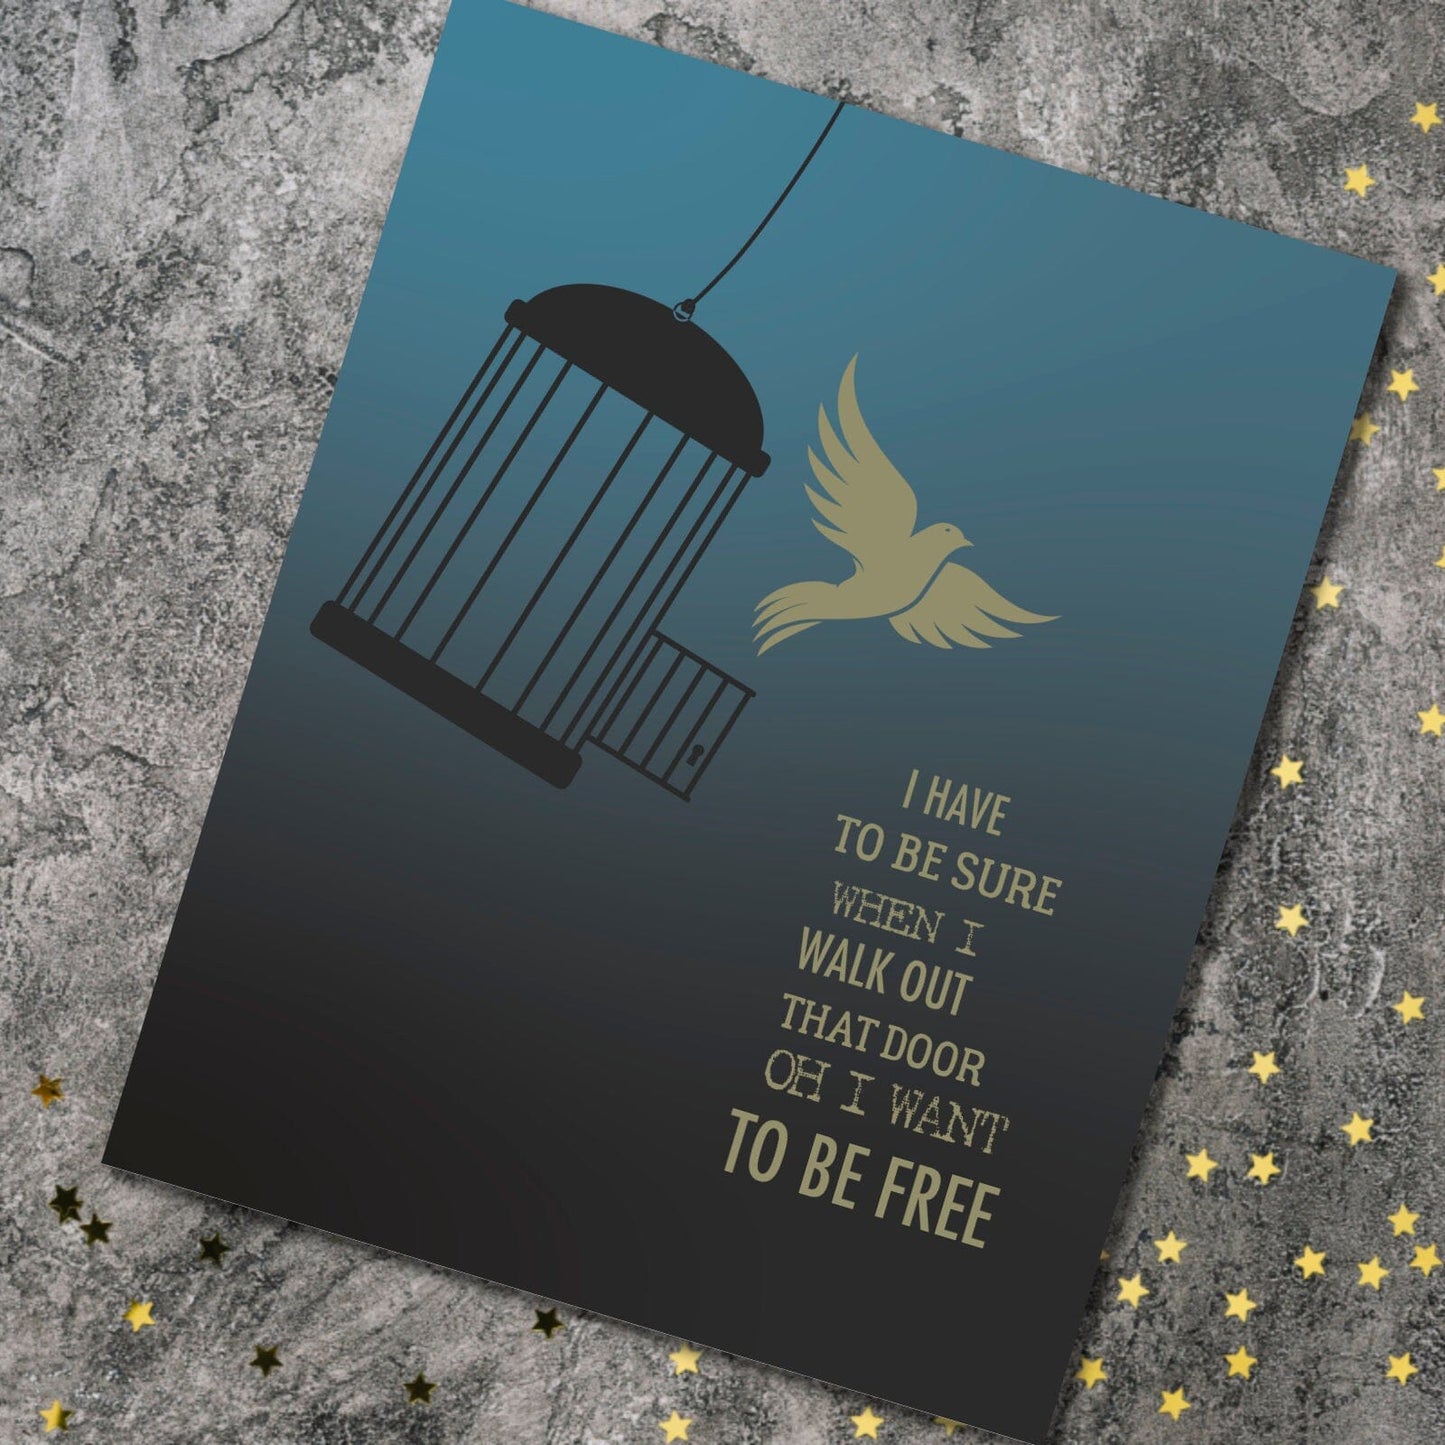 I Want to Break Free by Queen - Lyric Inspired Wall Art Rock Music Print Song Lyrics Art Song Lyrics Art 8x10 Unframed Print 